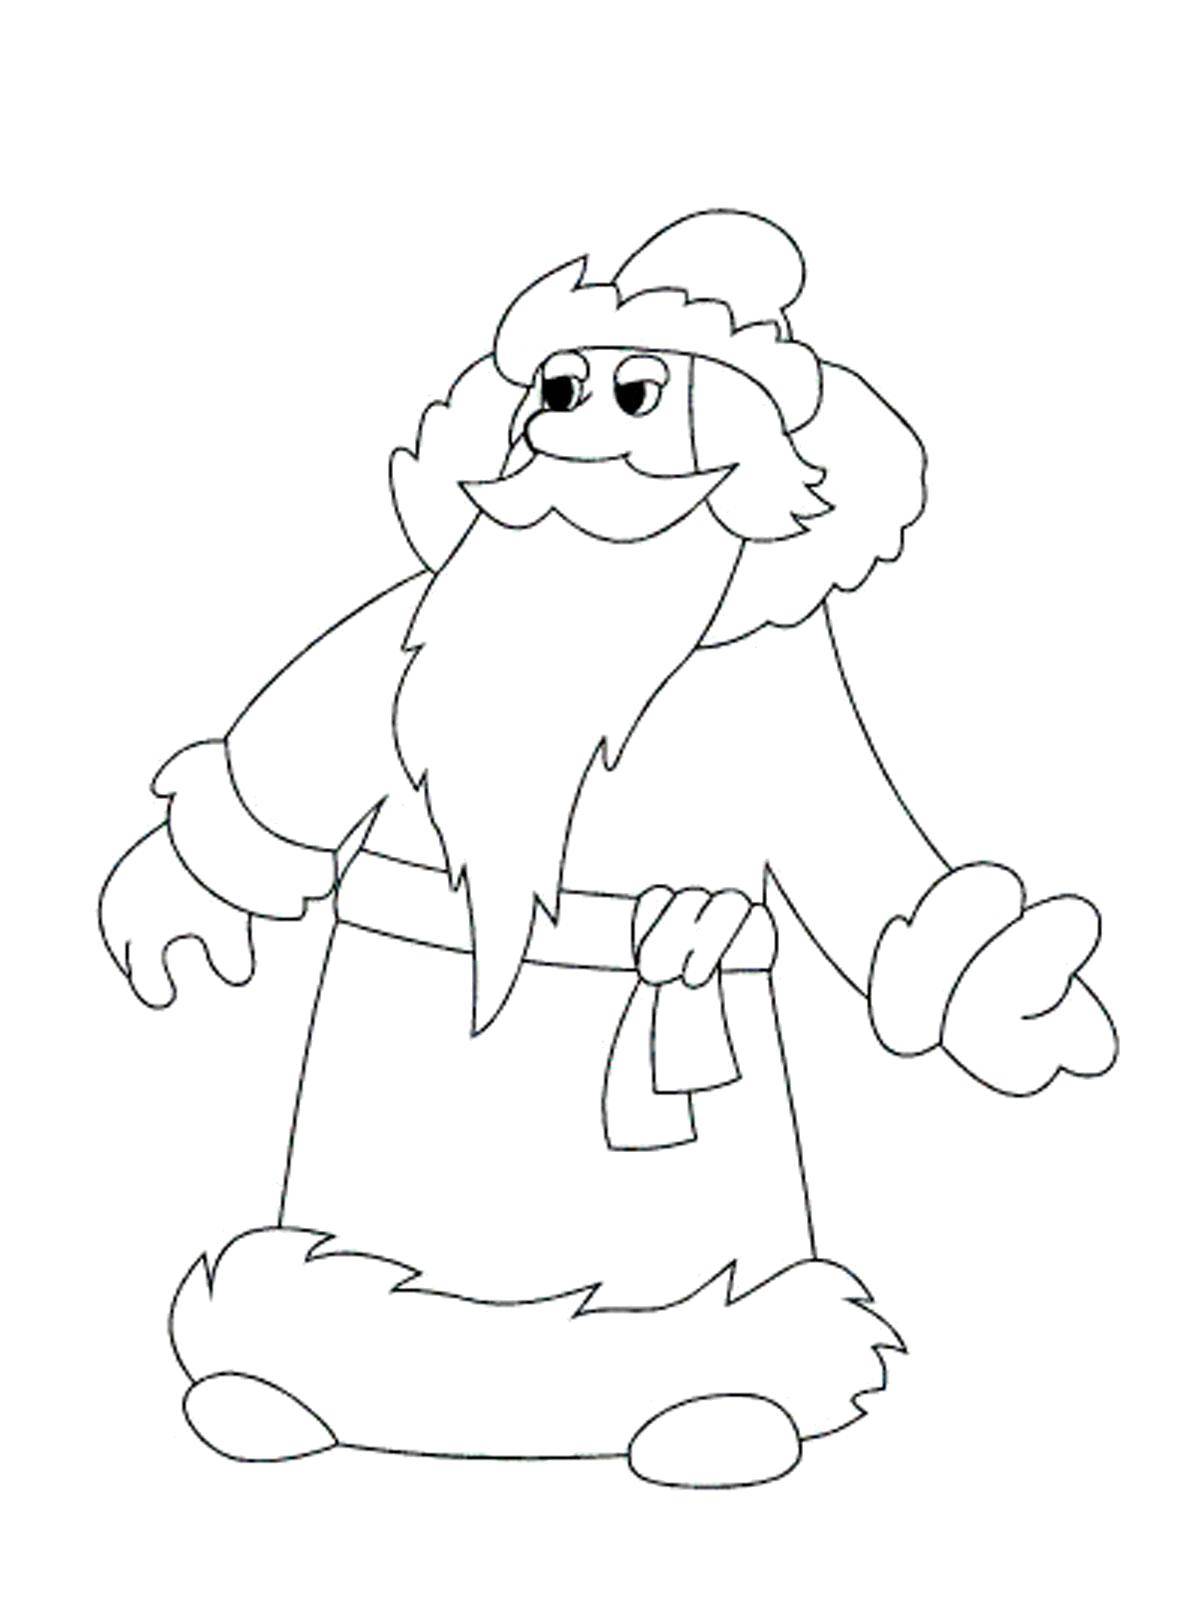 Coloring Santa Claus. Category simple coloring. Tags:  New Year, Santa Claus.